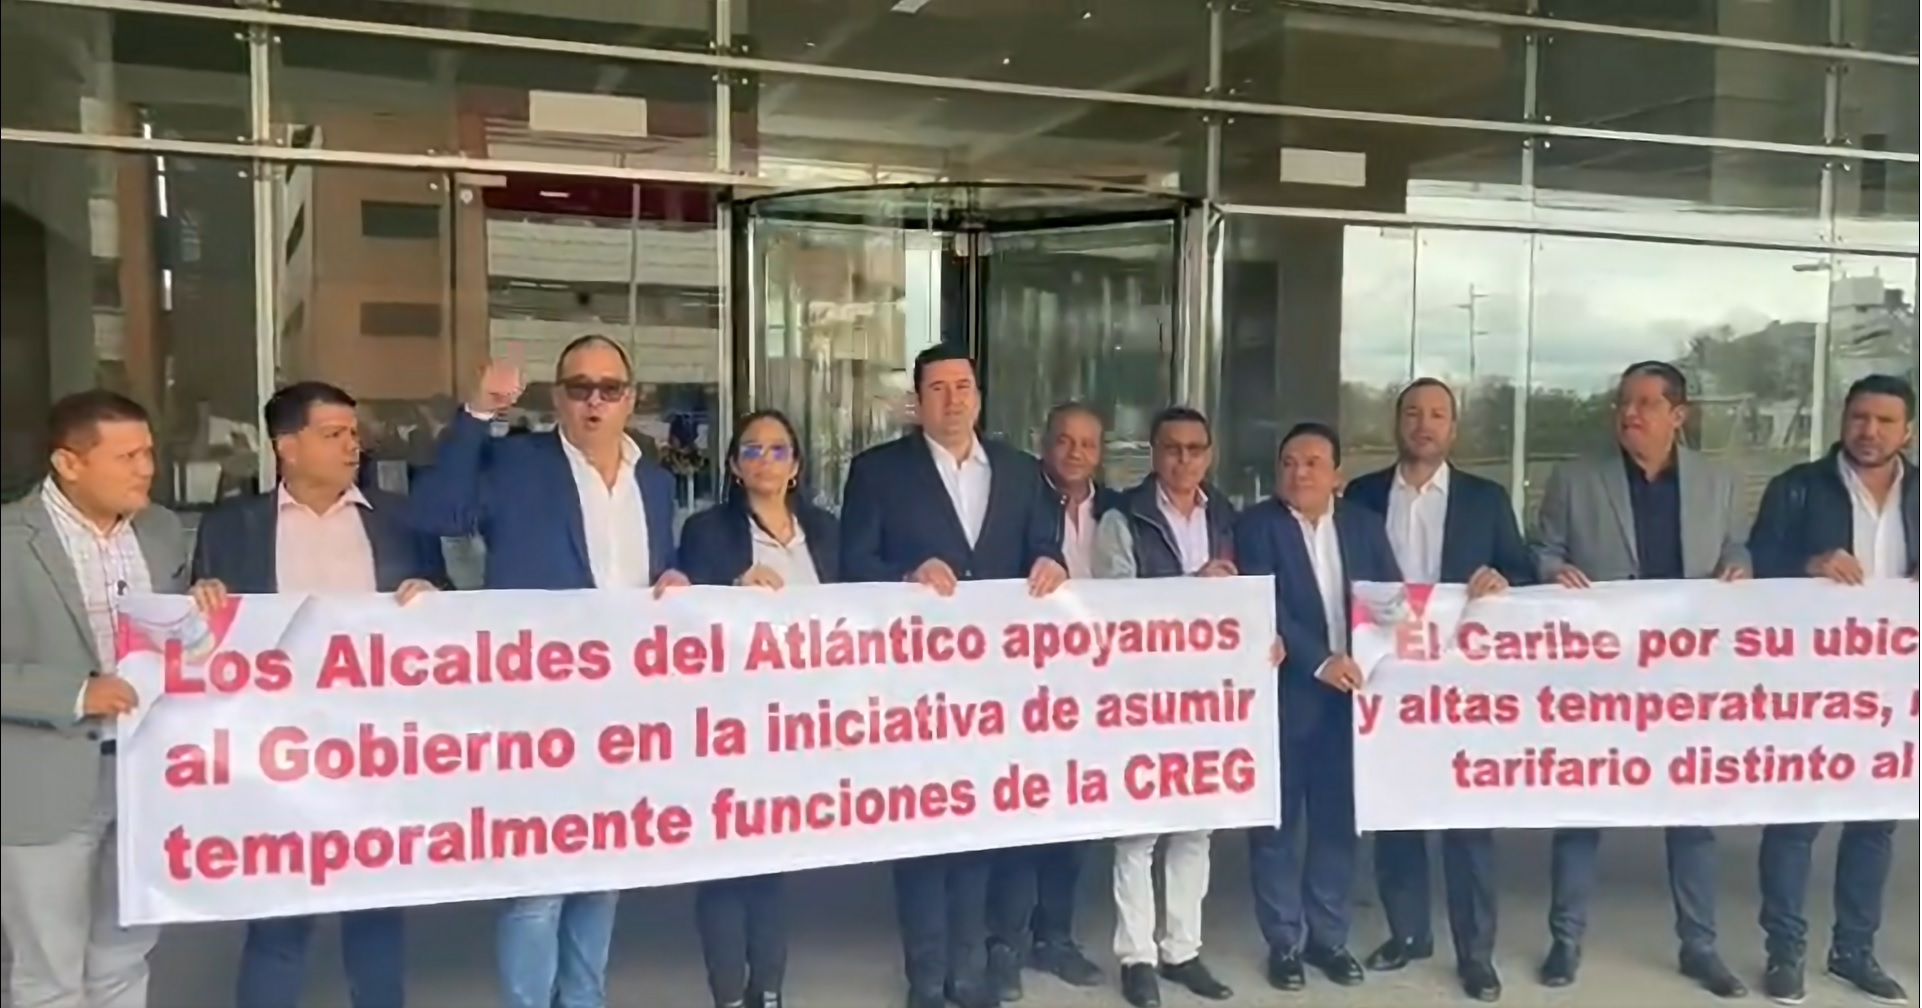 Alcaldes Atlantico - CREG